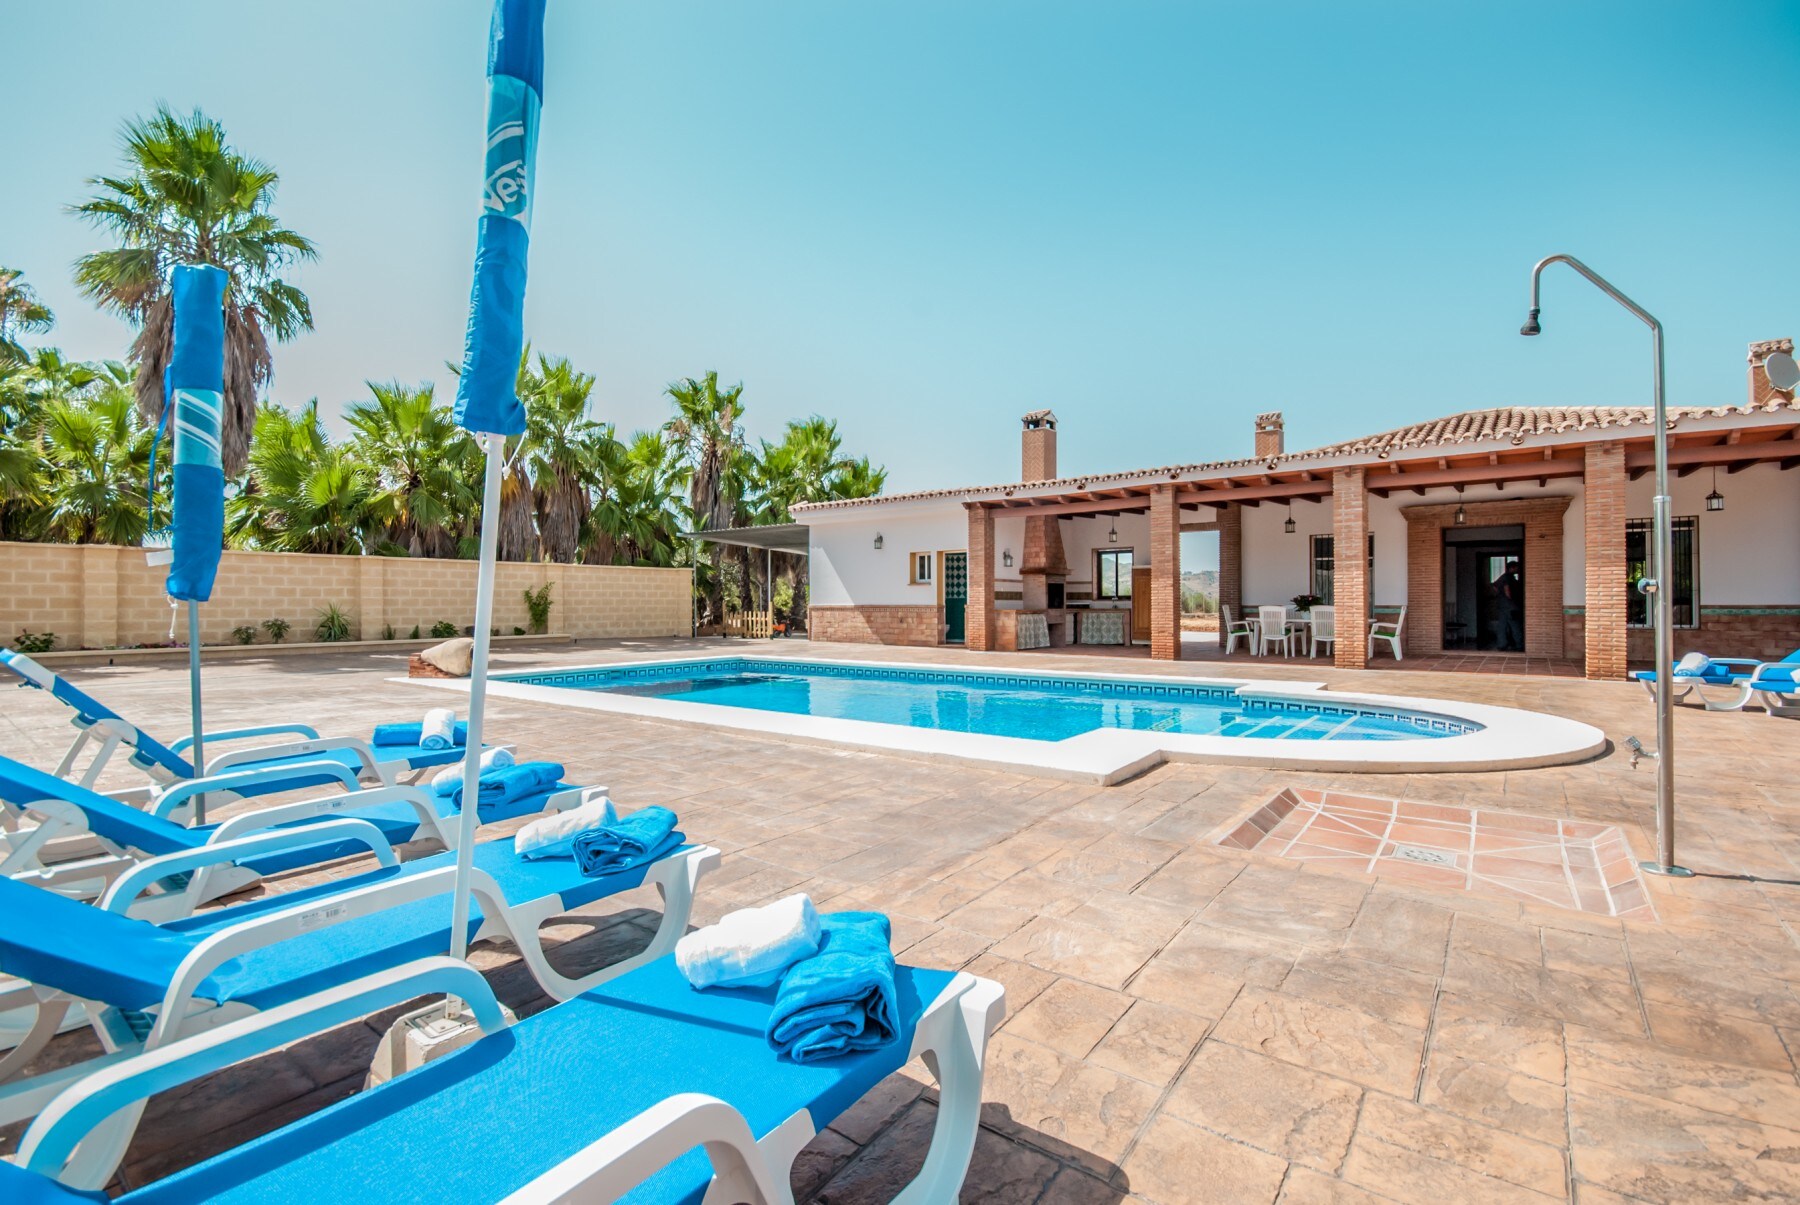 Enjoy the private pool of this estate in Alhaurín el Grande